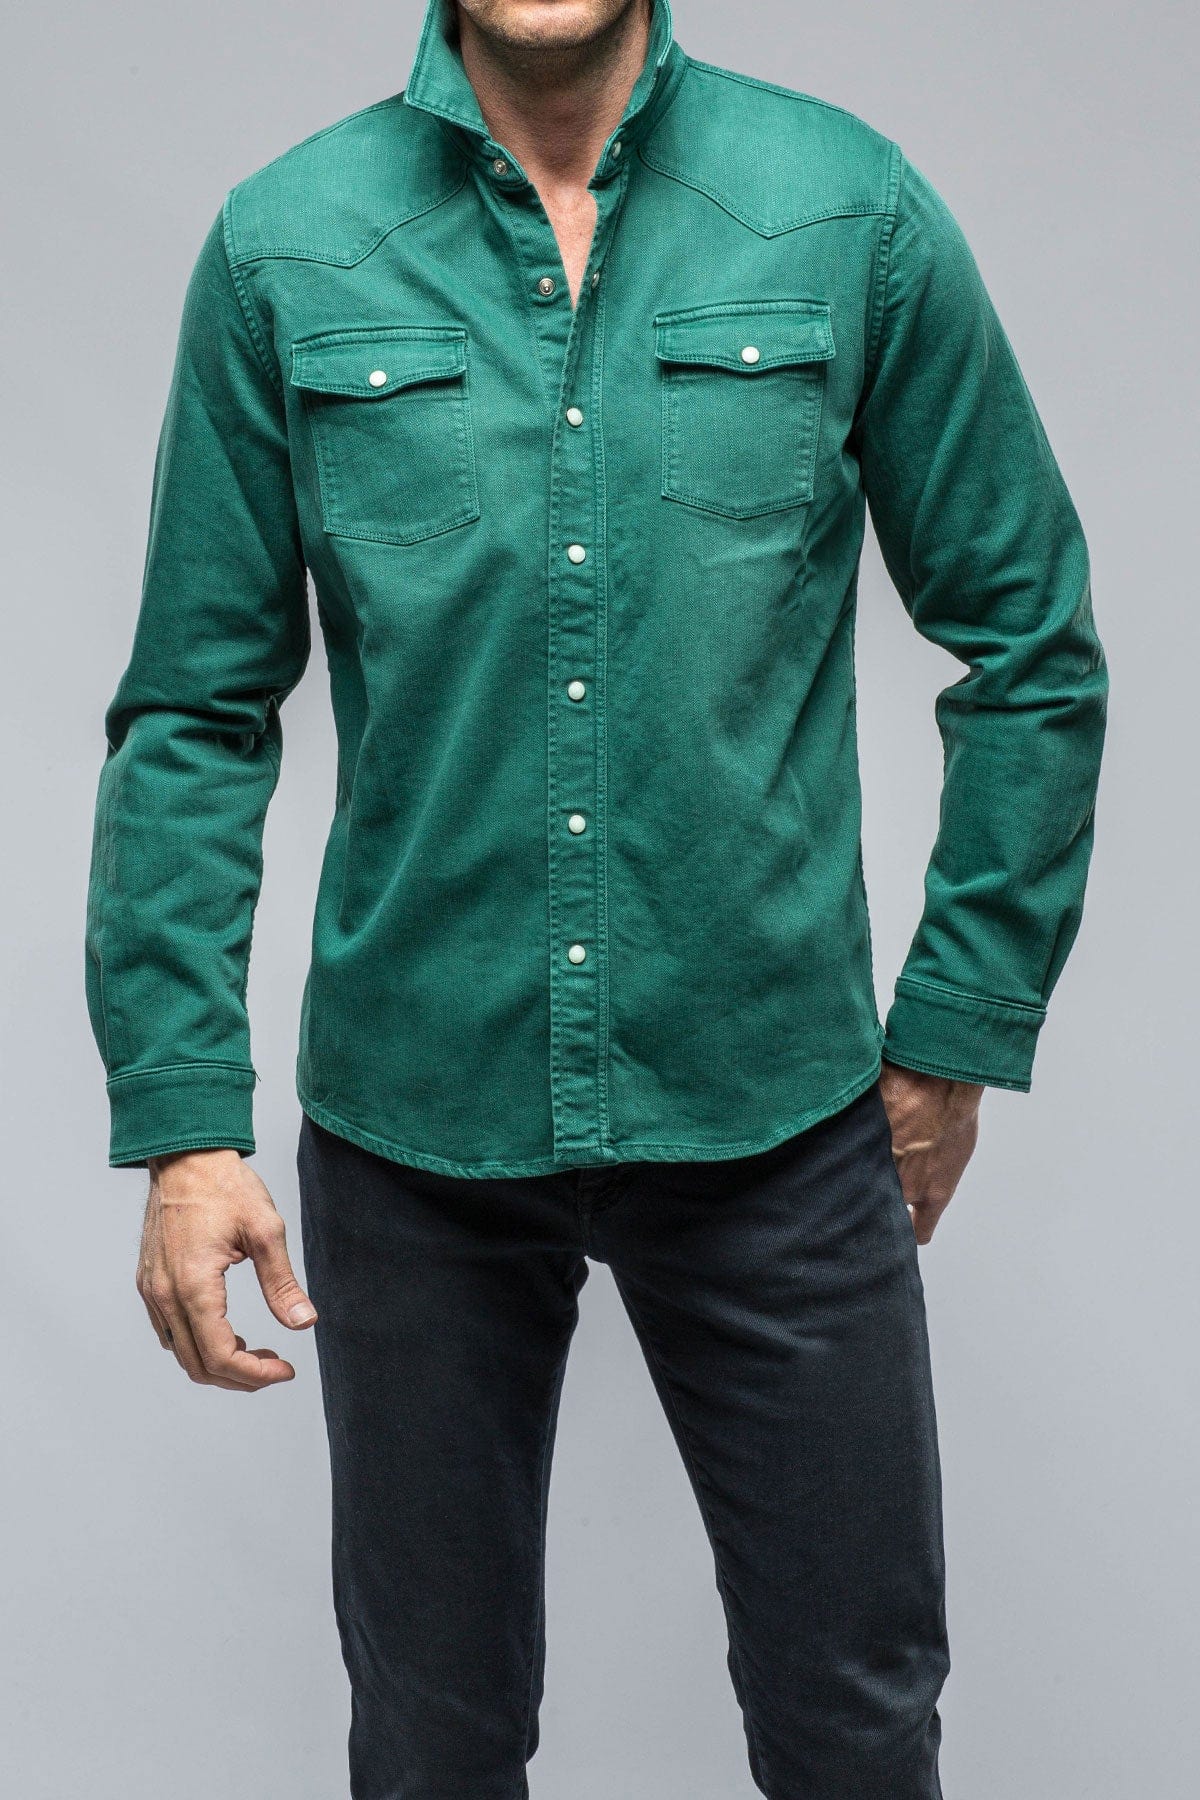 Ranger Denim Snap Shirt In Green - AXEL'S